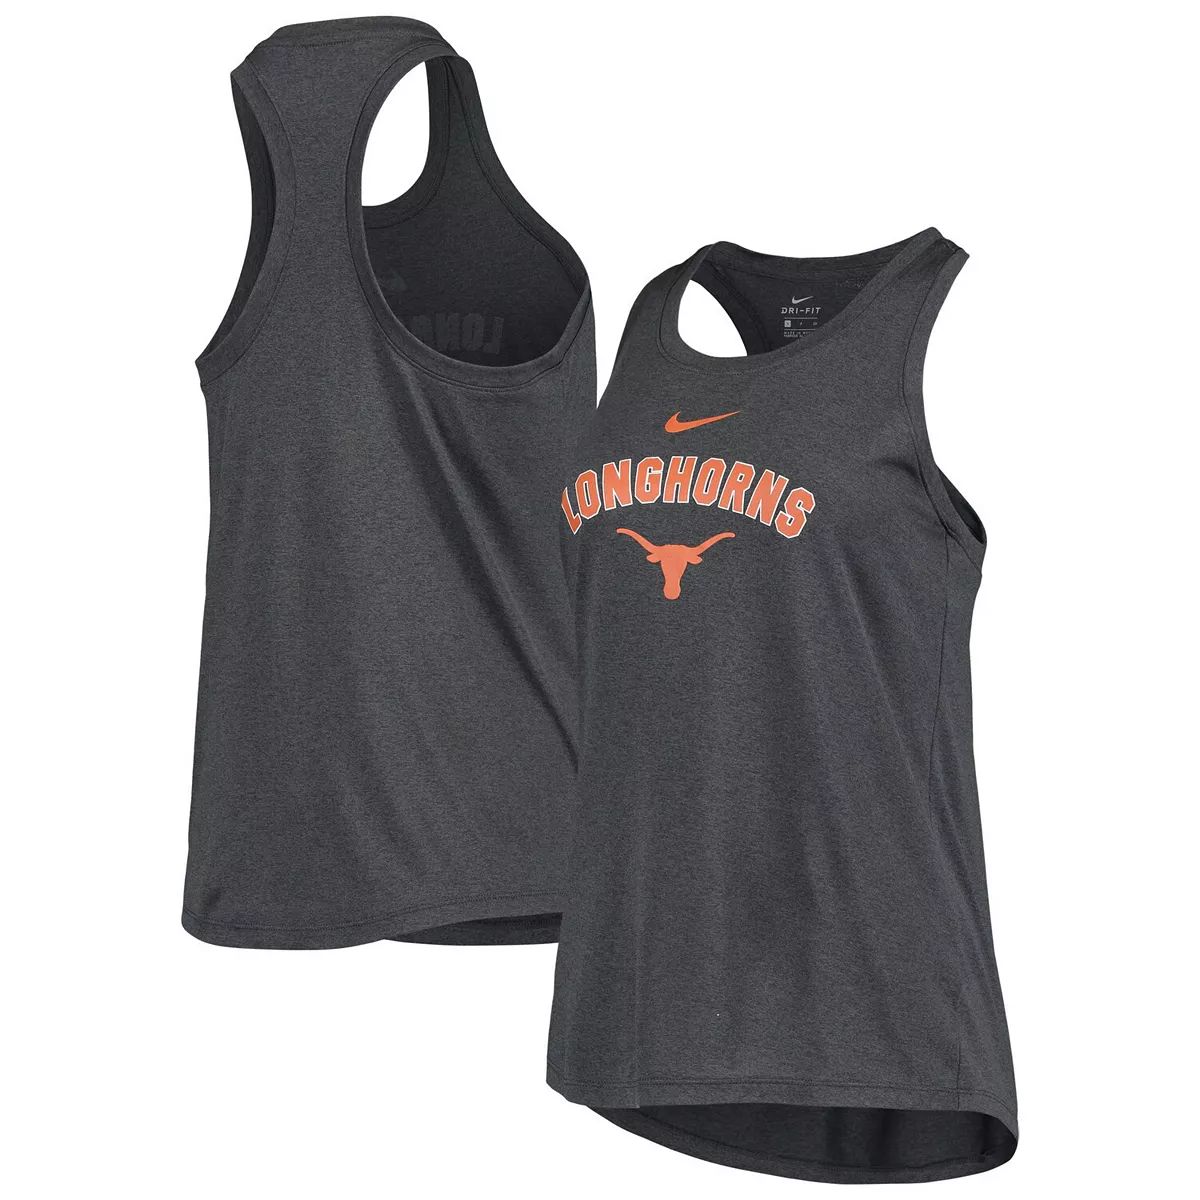 Women's Nike Anthracite Texas Longhorns Arch & Logo Classic Performance Tank Top | Kohl's